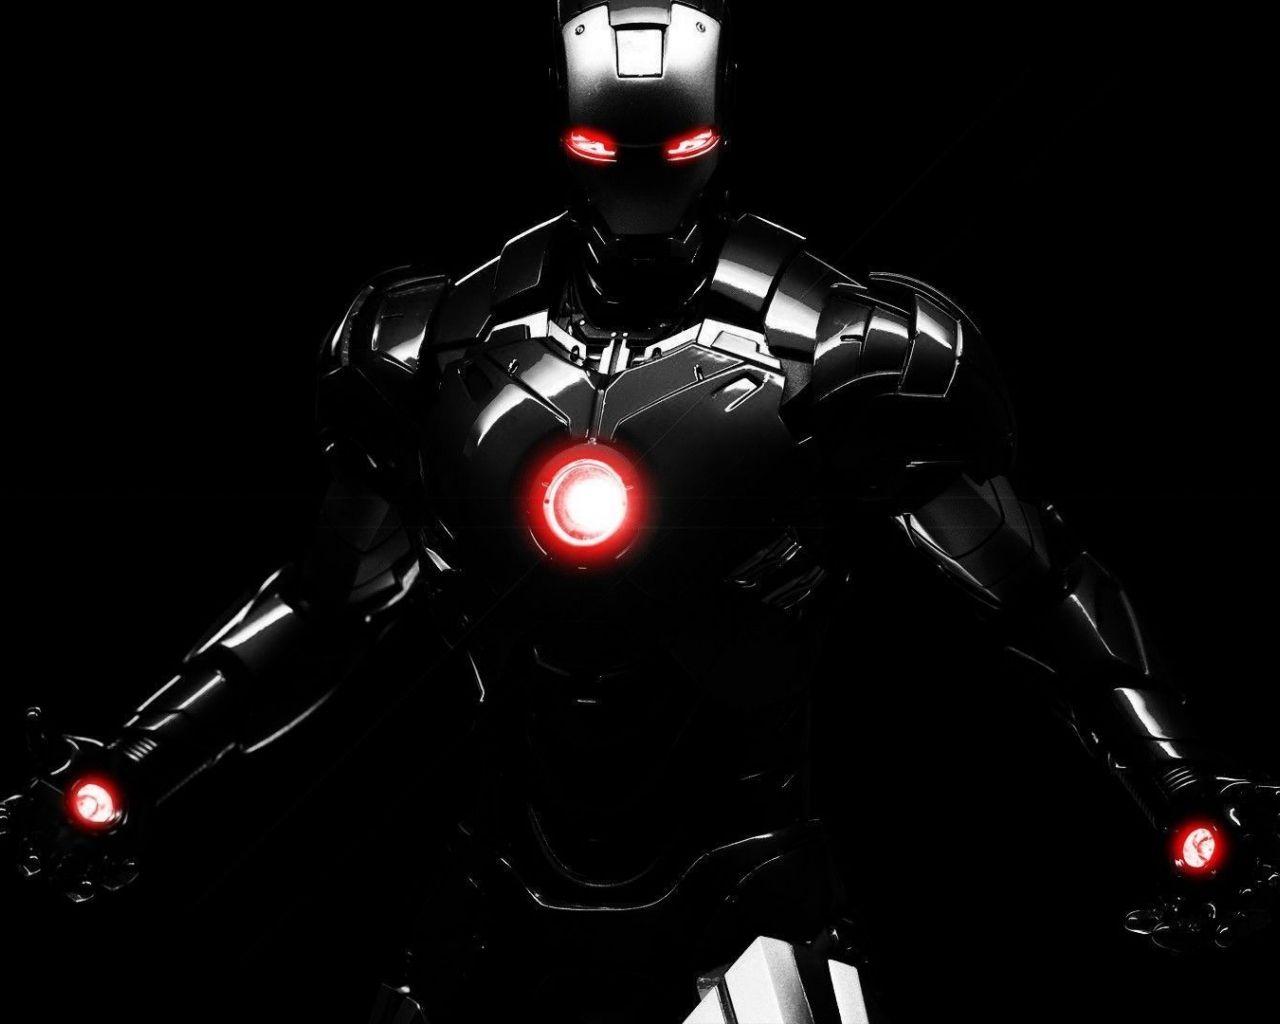 Dark Iron Man Wallpapers Top Free Dark Iron Man Backgrounds